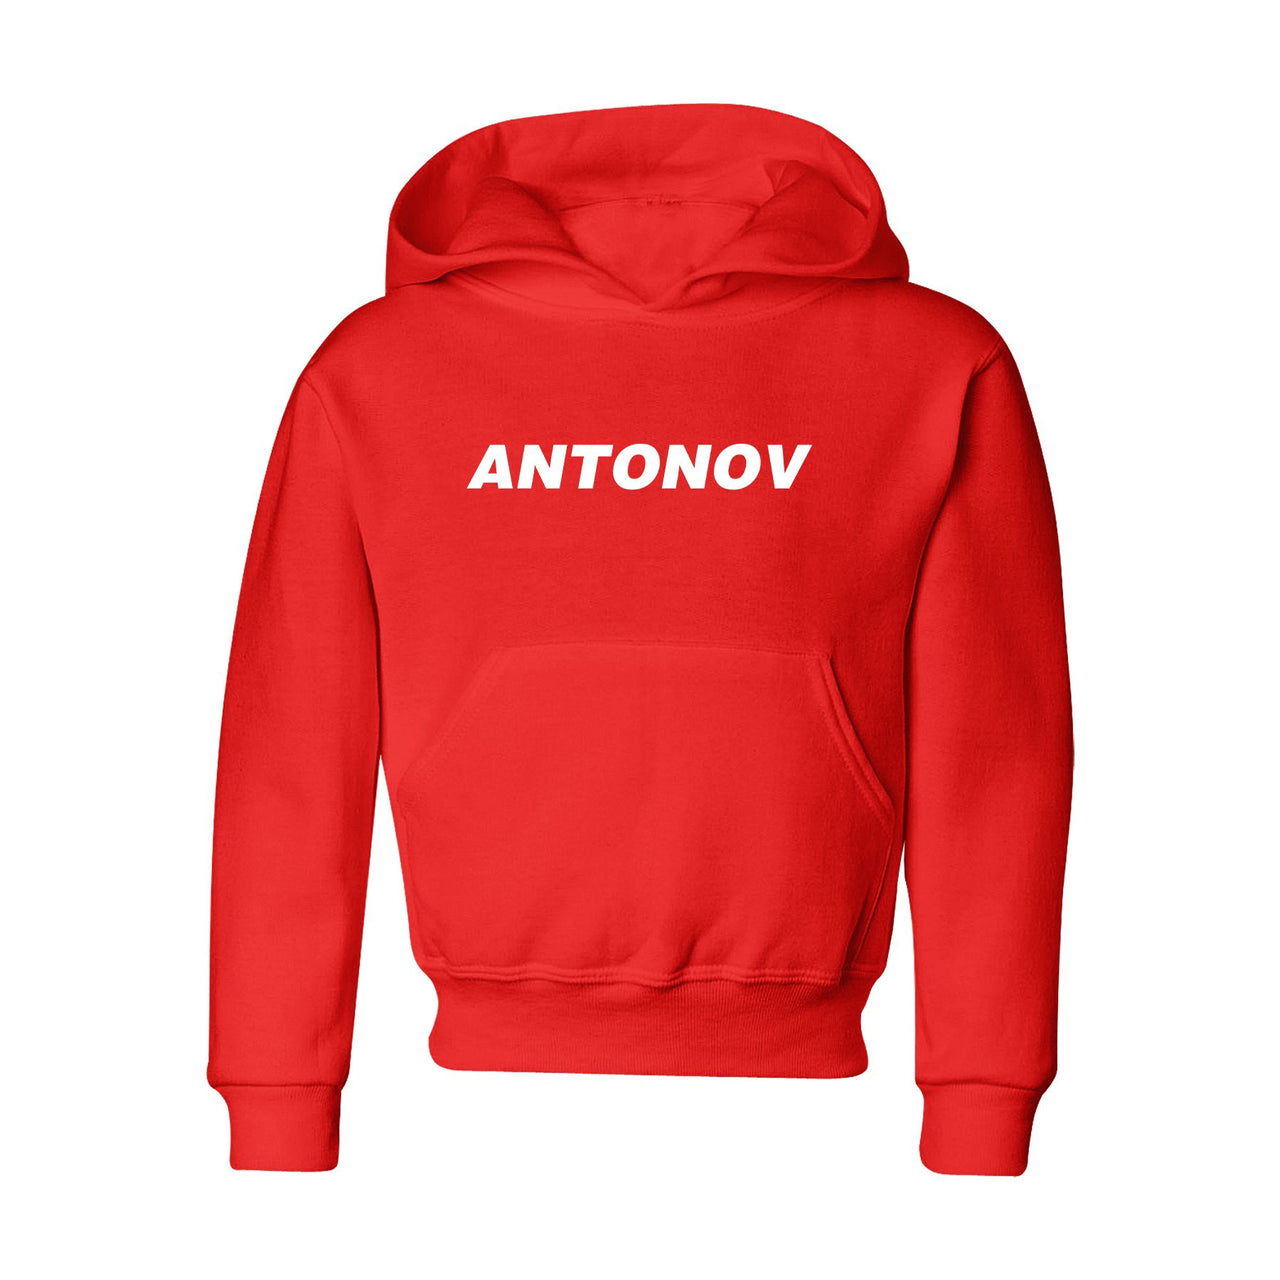 Antonov & Text Designed "CHILDREN" Hoodies